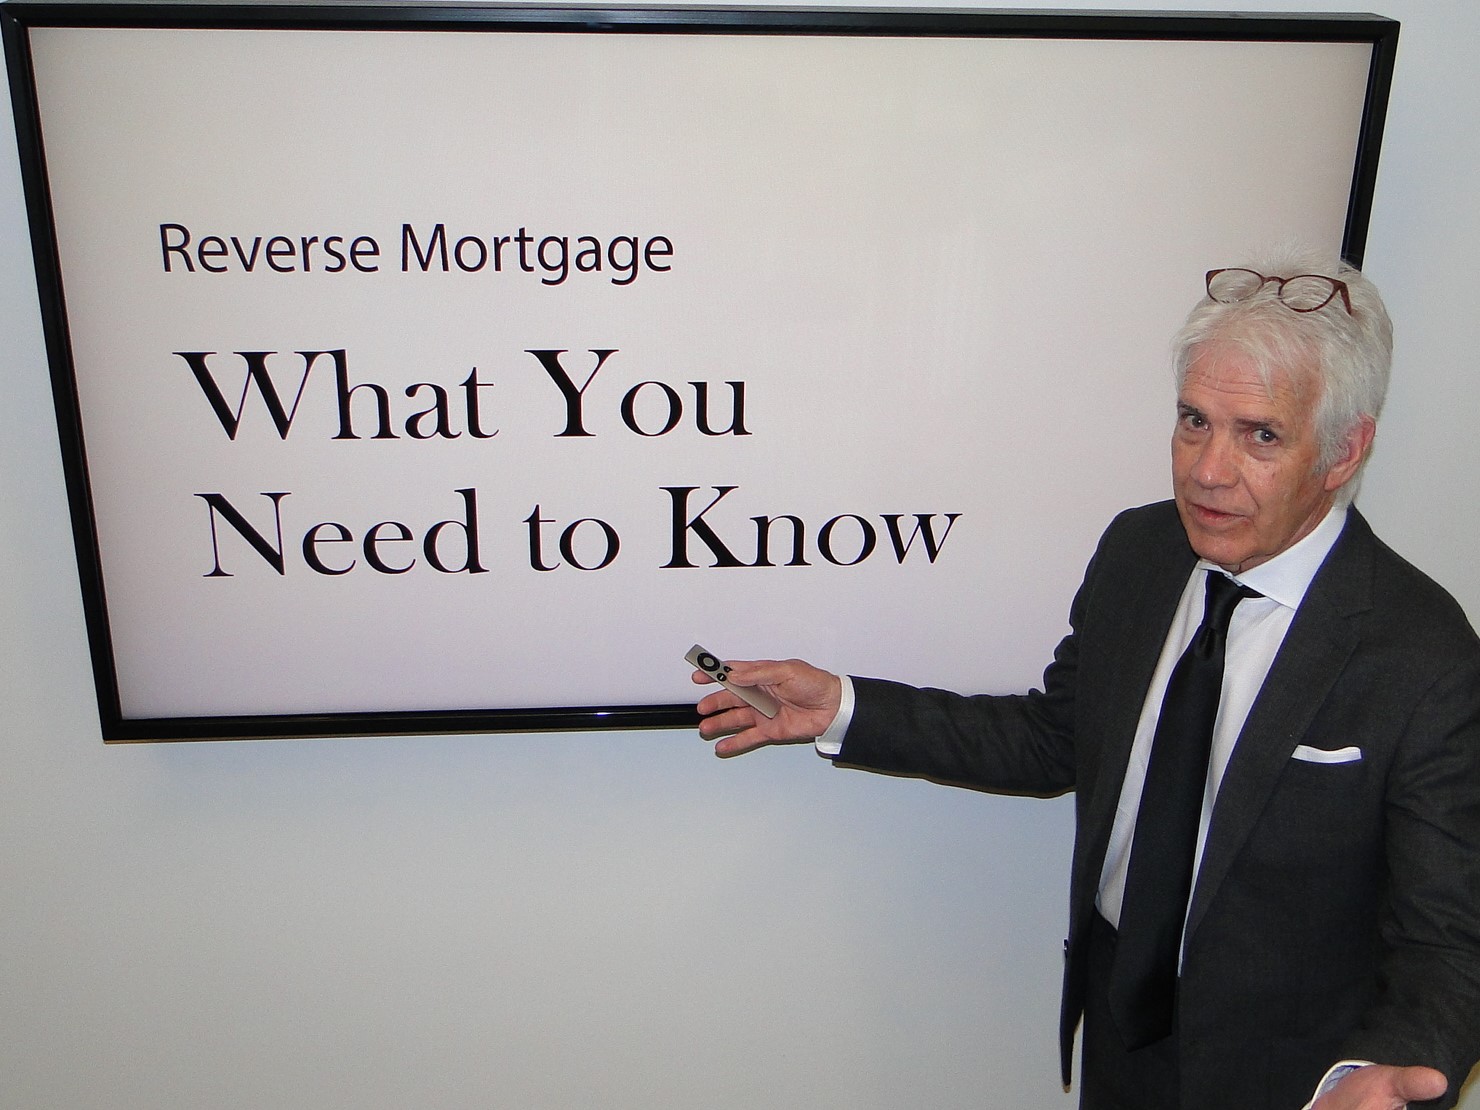 reverse mortgage broker mike harrell at work 2